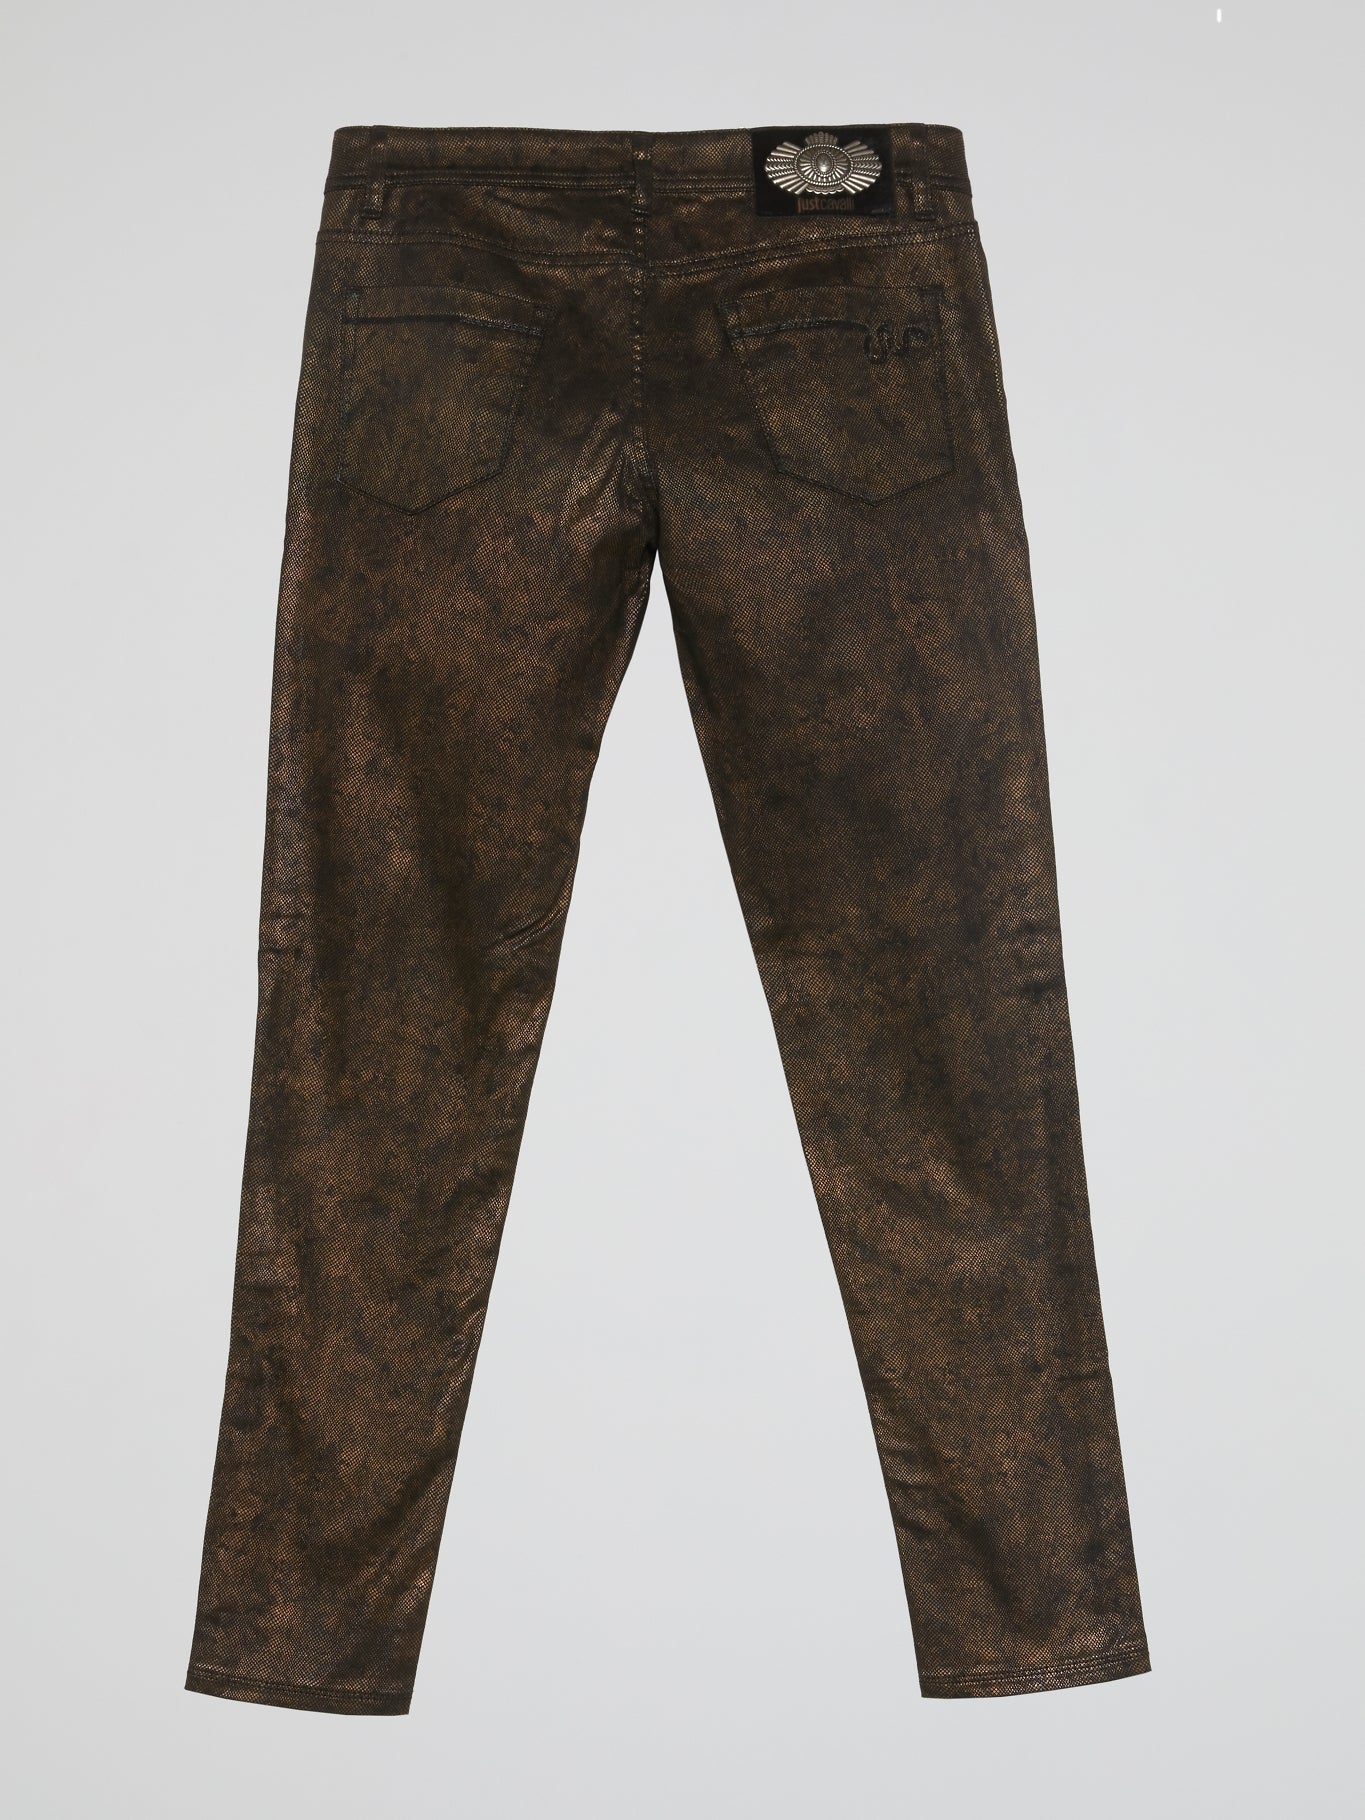 Brown Rustic Pants